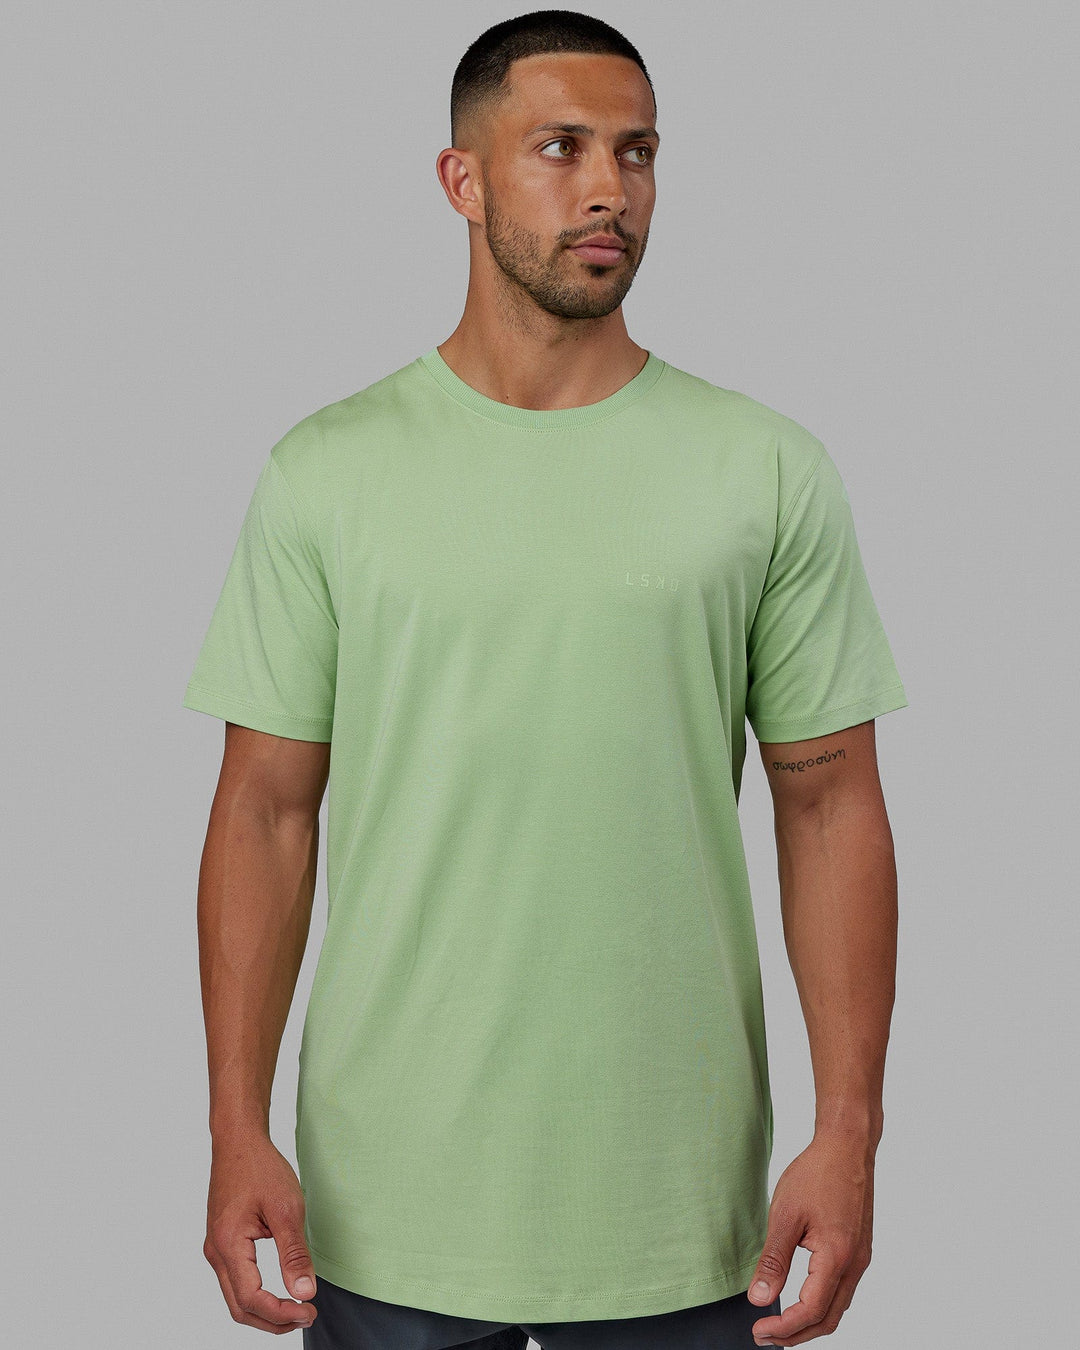 Man wearing Deluxe PimaFLX Tee - Green Fig